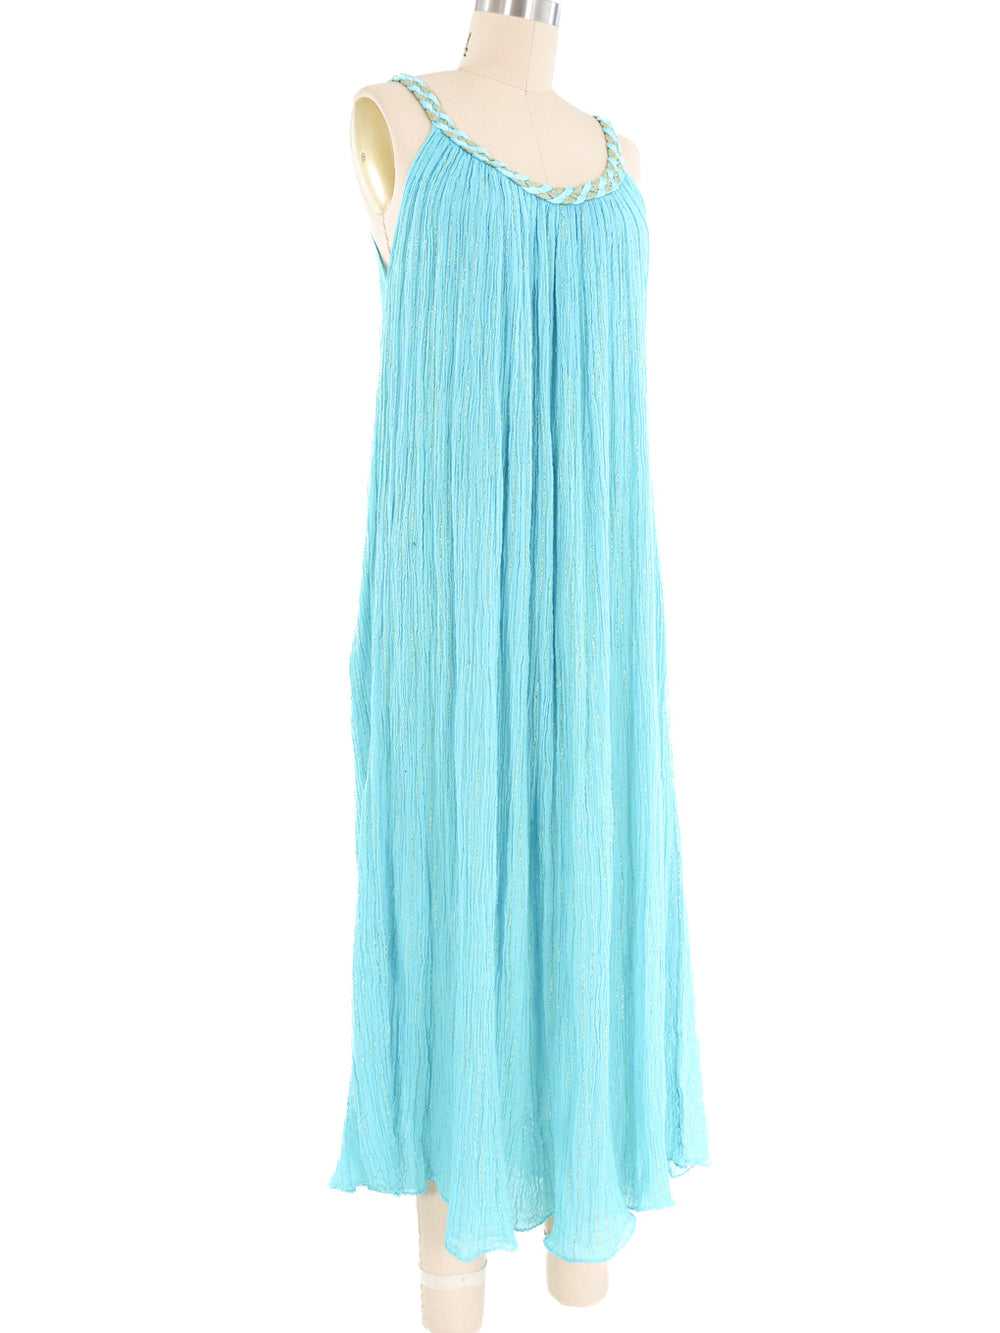 Turquoise Grecian Gauze Midi Dress - image 4